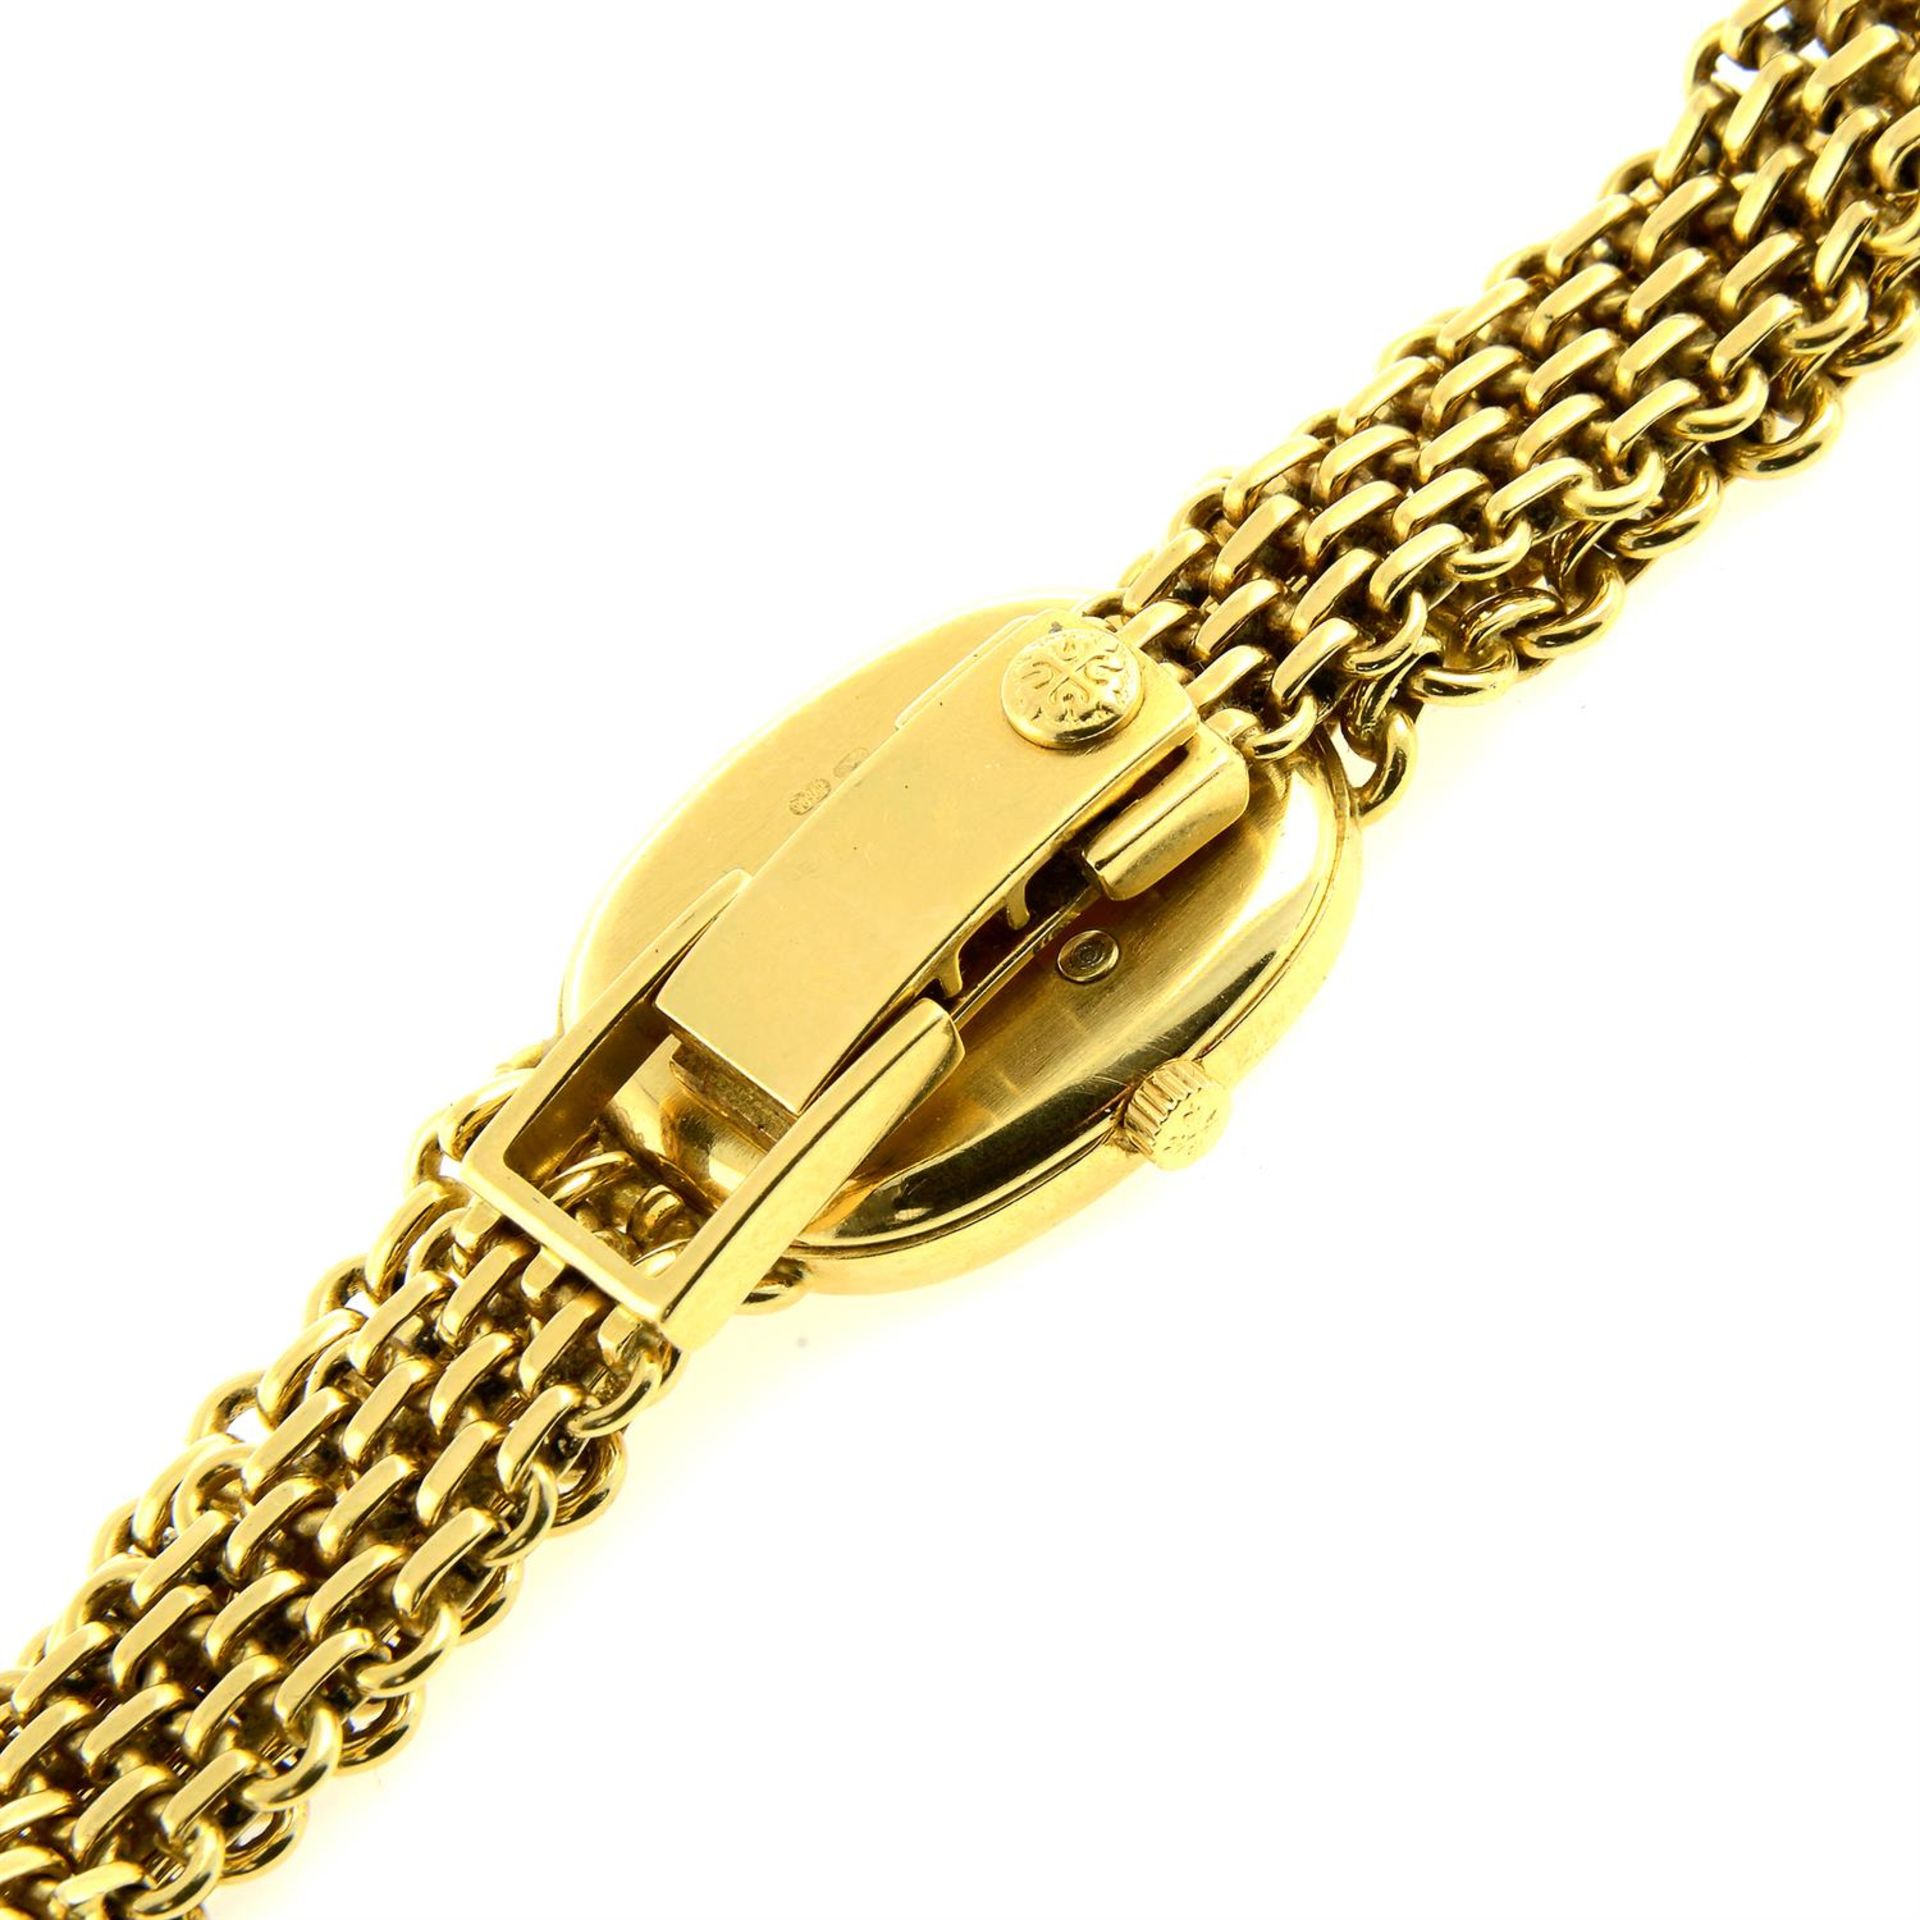 PATEK PHILIPPE - an 18ct yellow gold Ellipse bracelet watch, 20x24mm. - Image 3 of 5